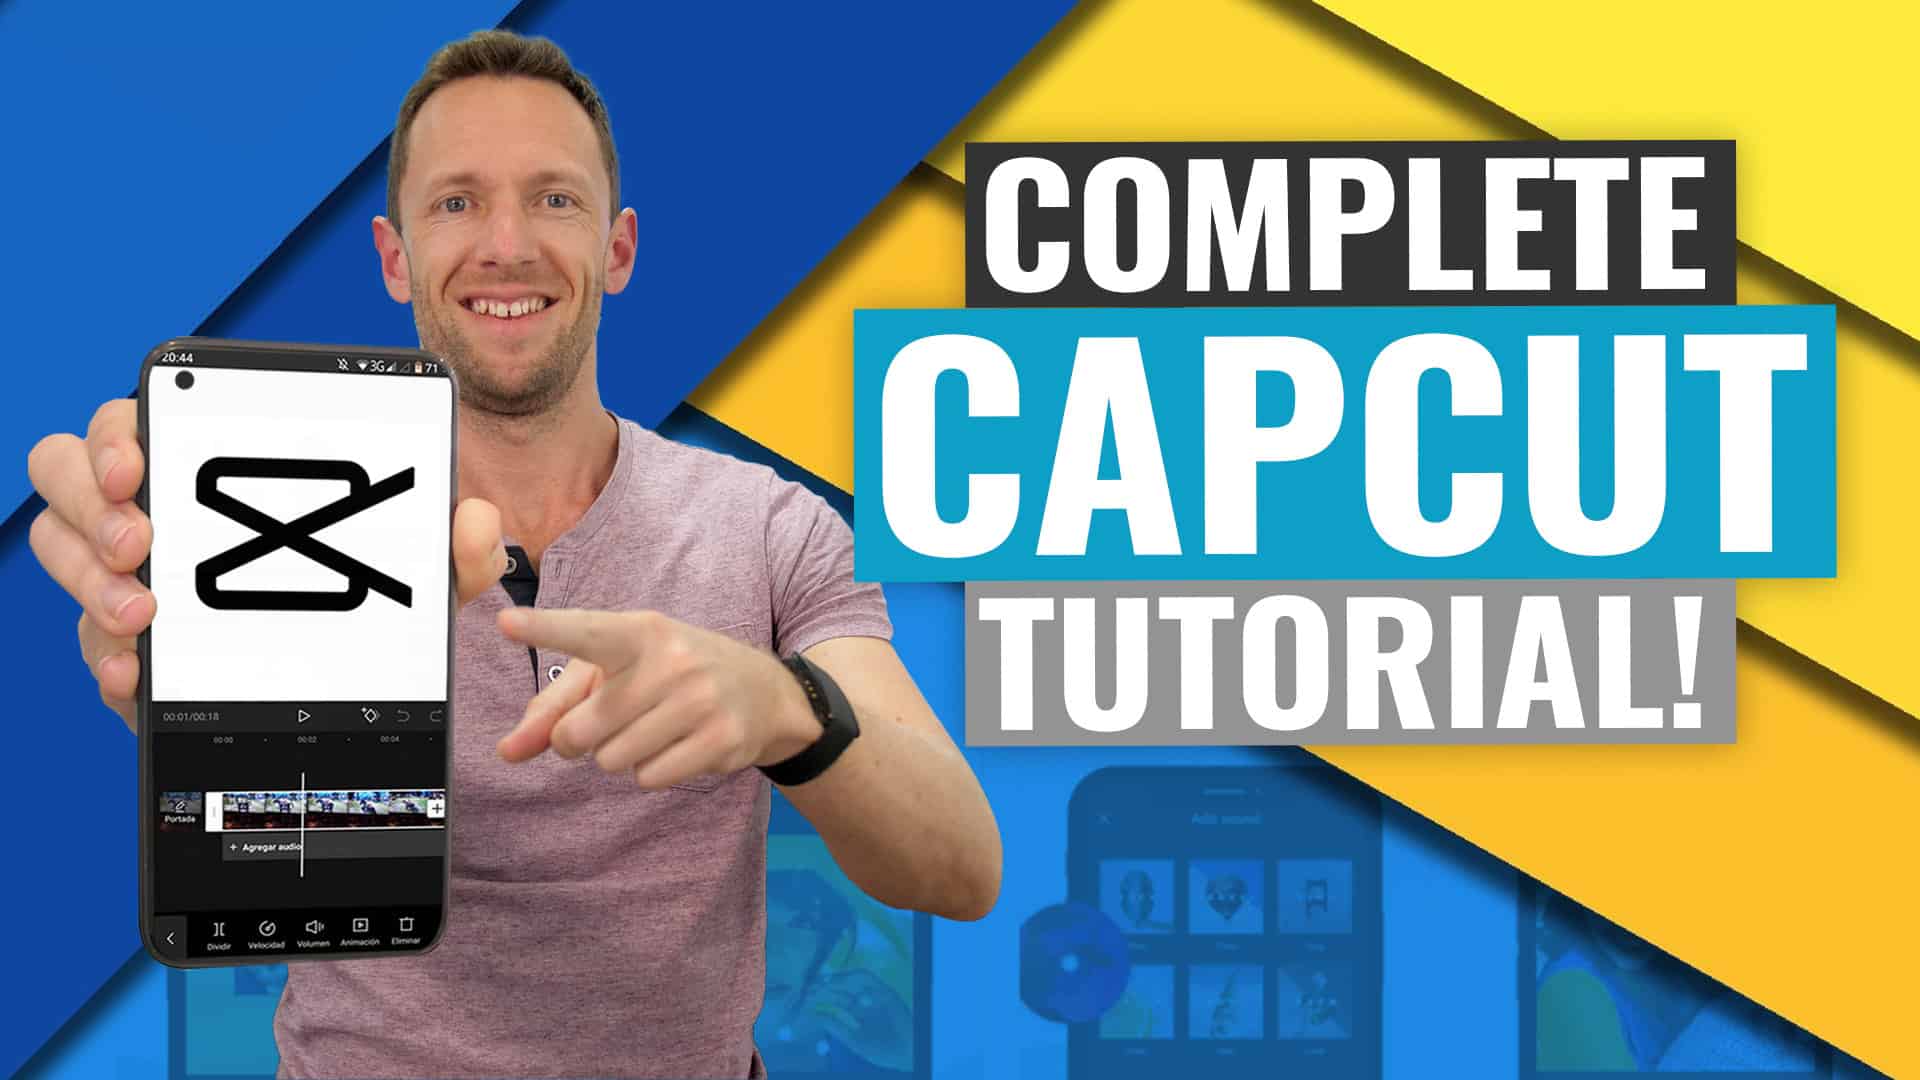 capcut-video-editing-tutorial-complete-guide